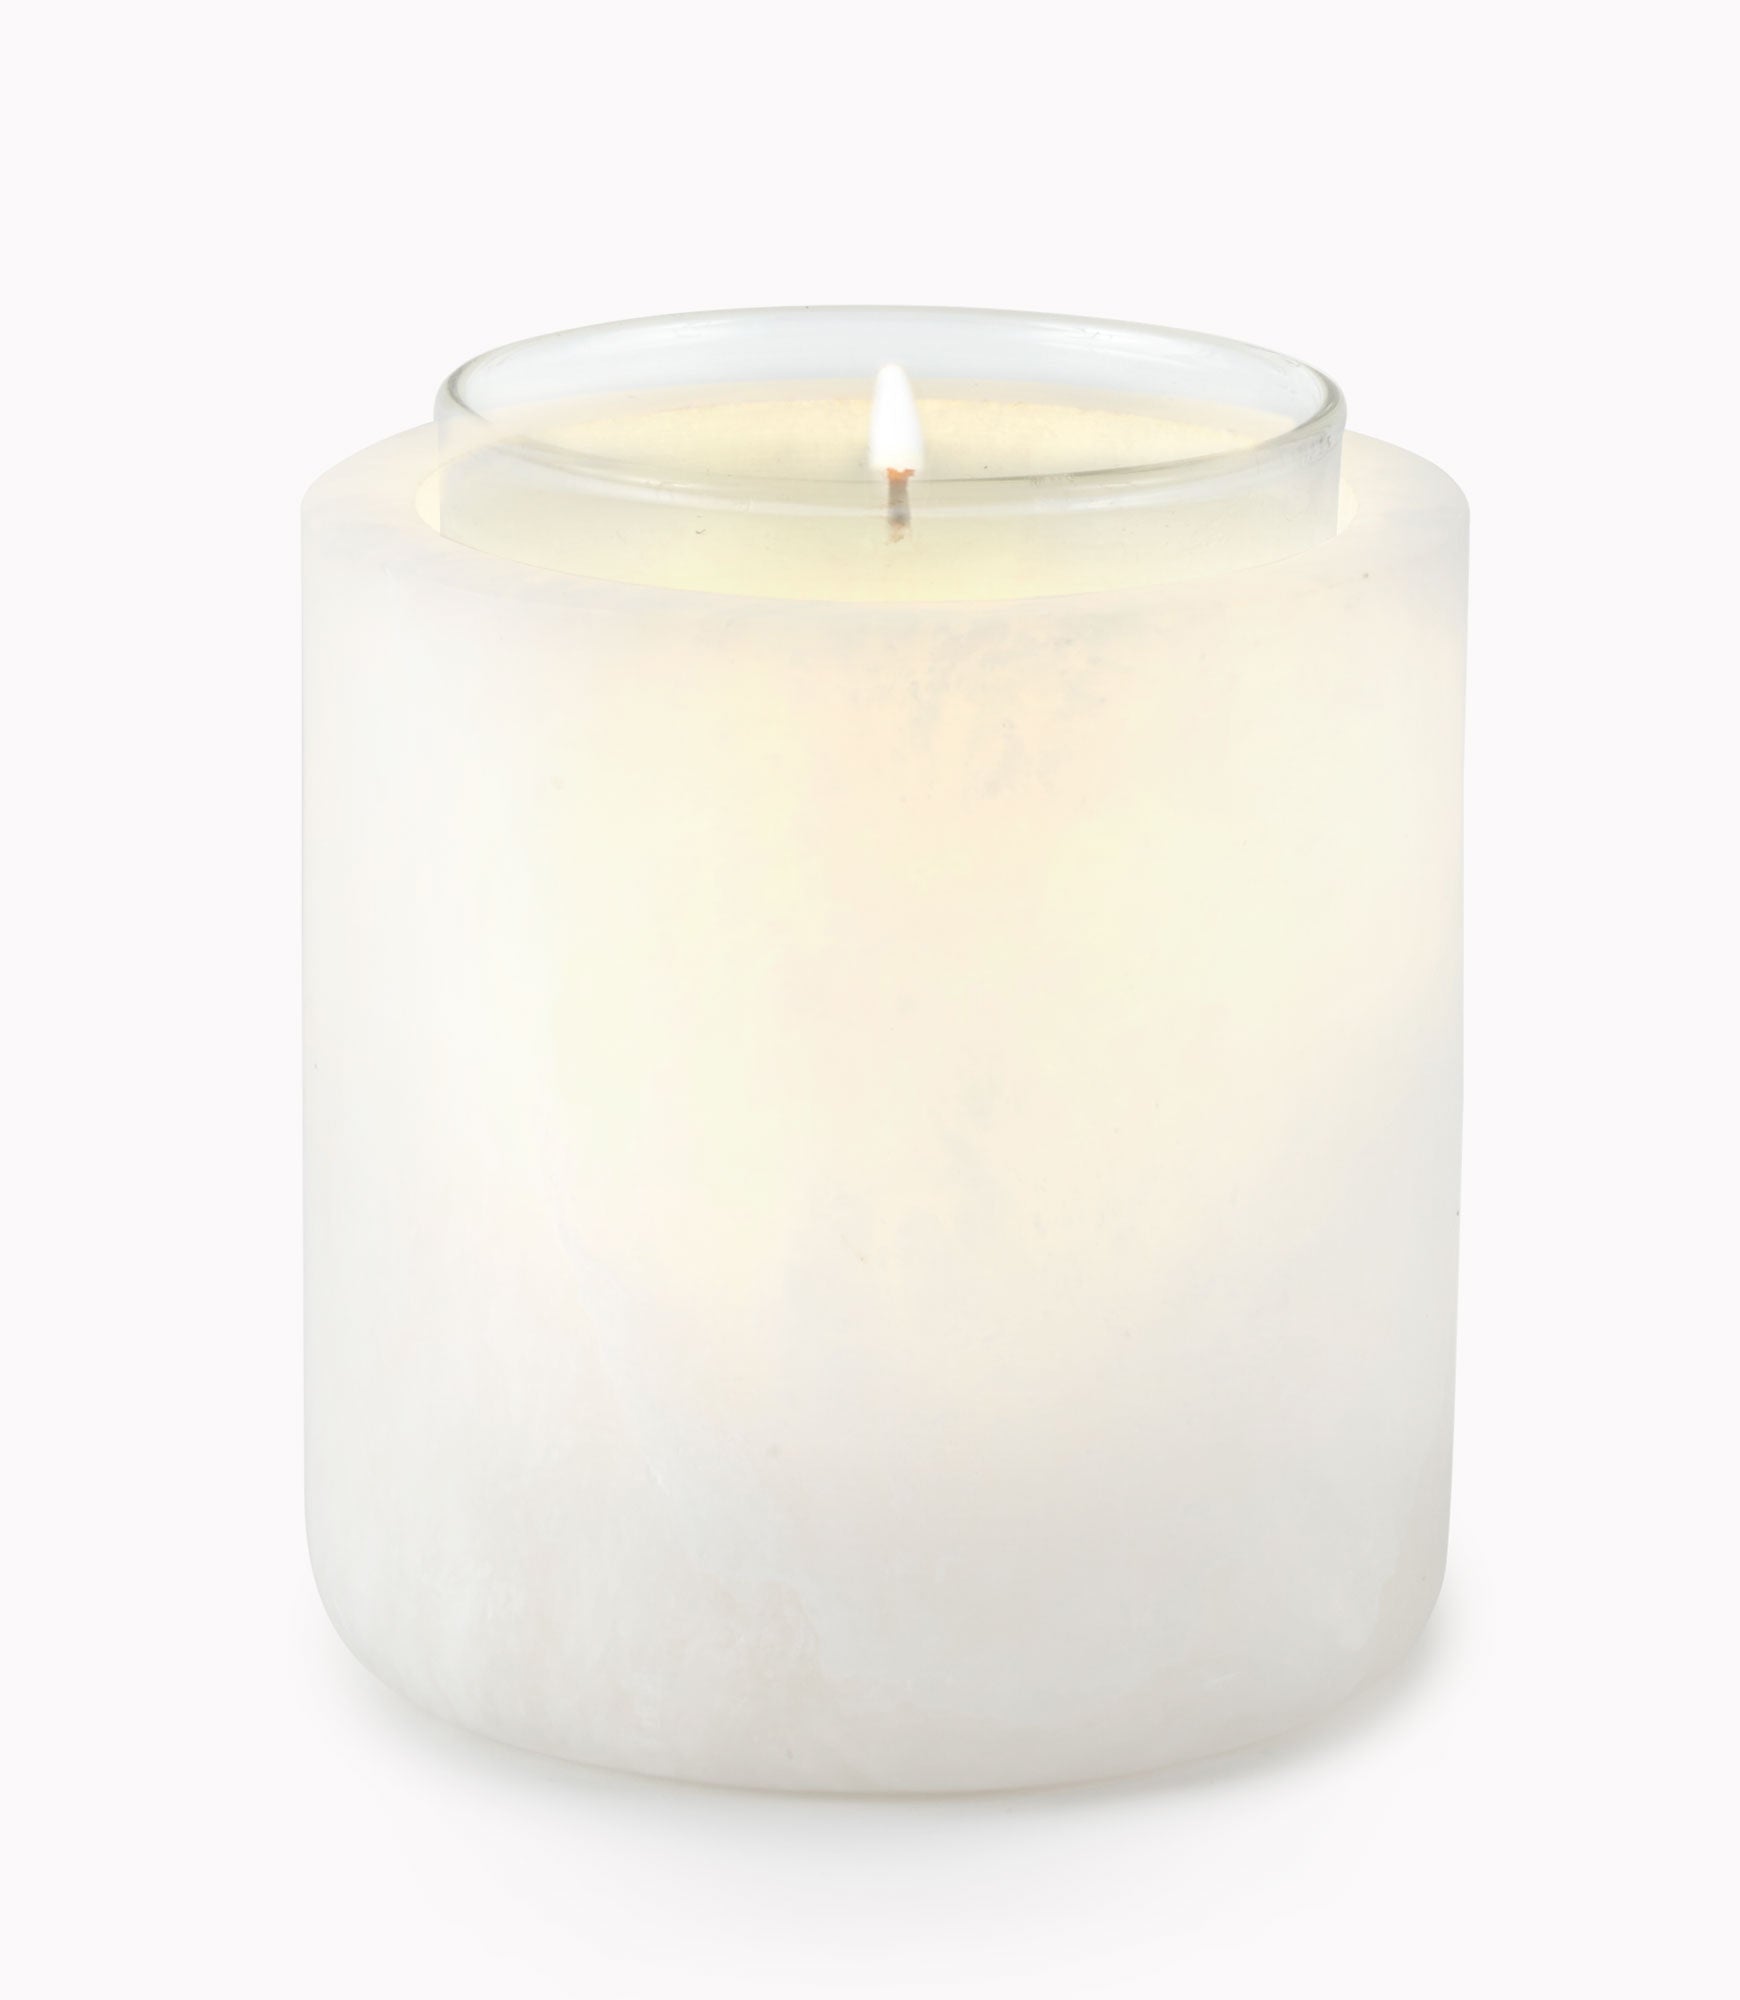 Lit candle in Alabaster decorative vessel, Candle Gift Set